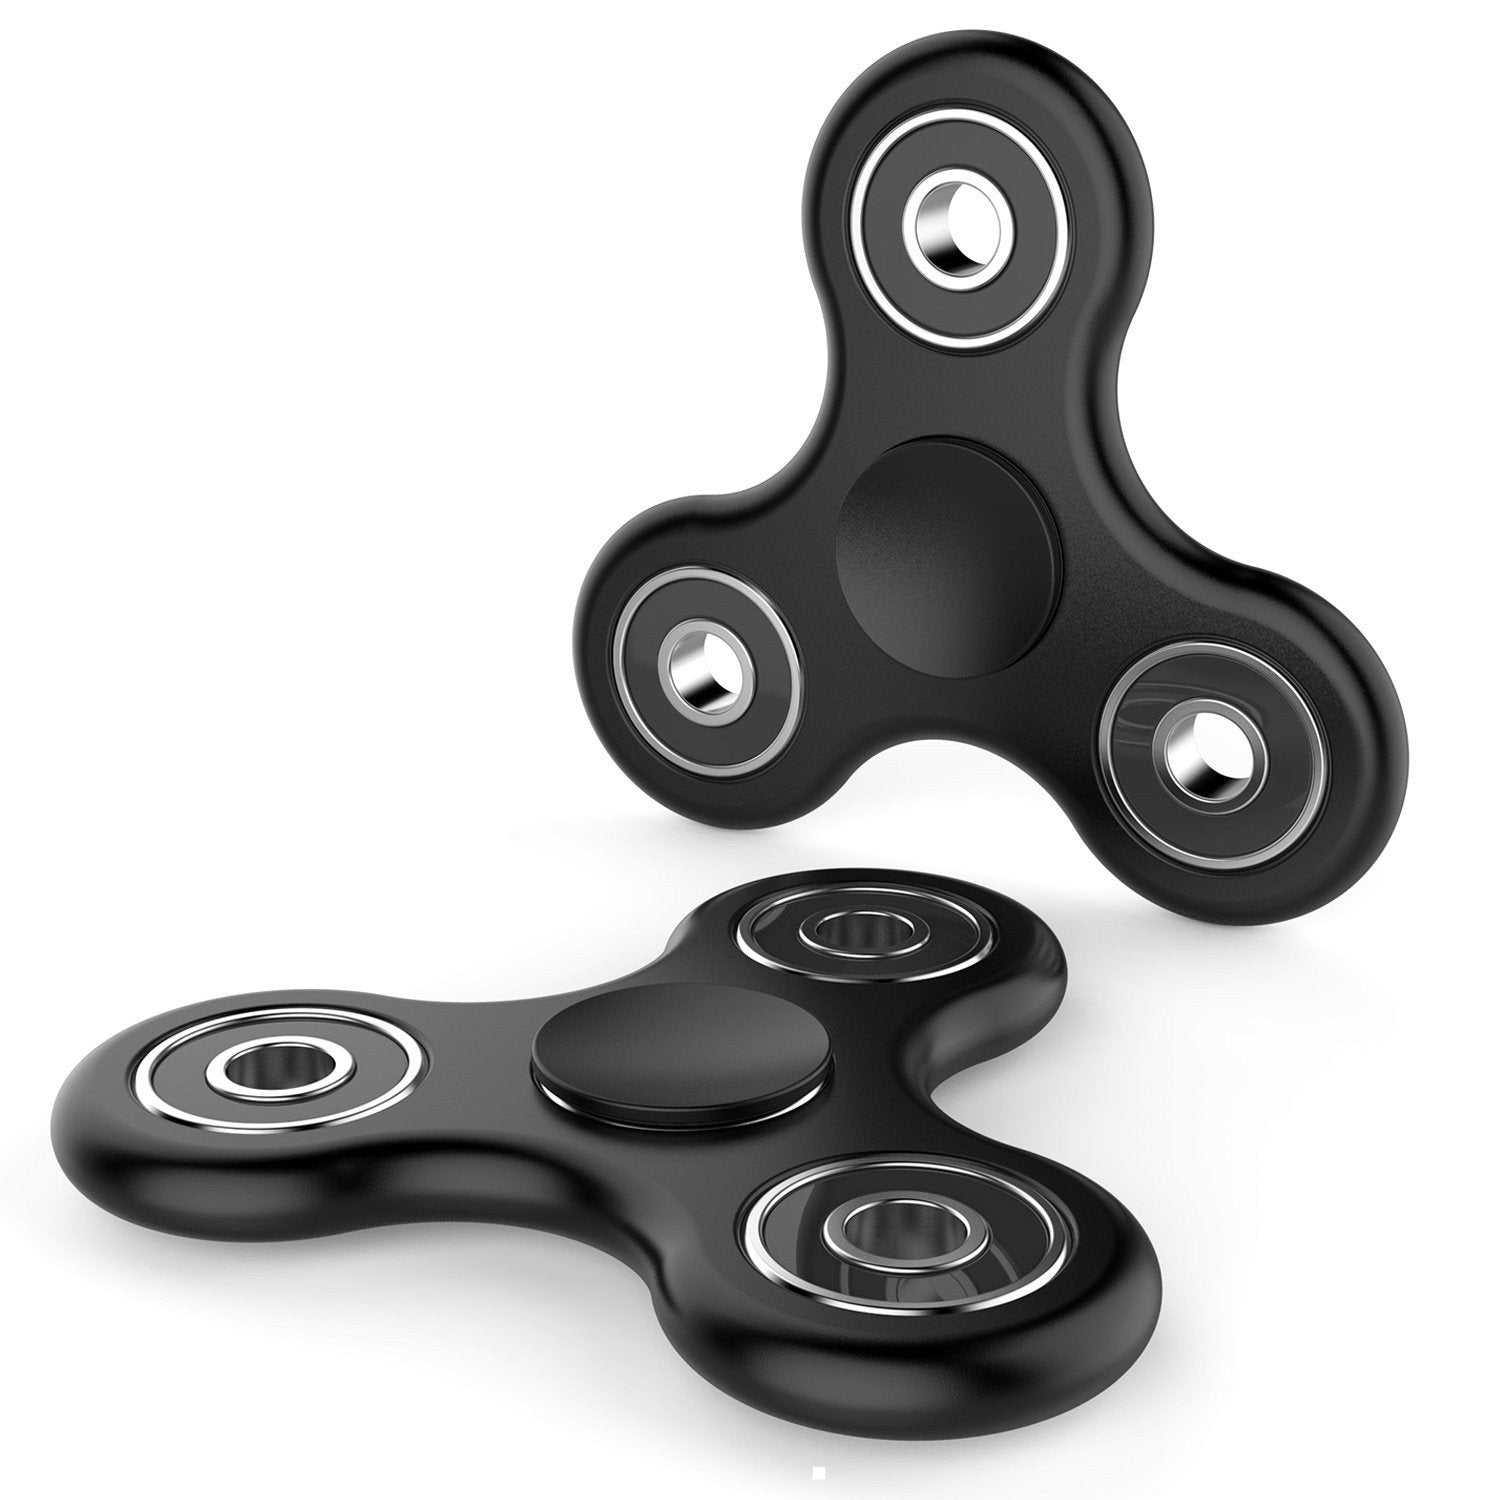 InfiSpin Z1 Fidget Spinner, Prime EDC Focus + Stress Relief Toy [Black]